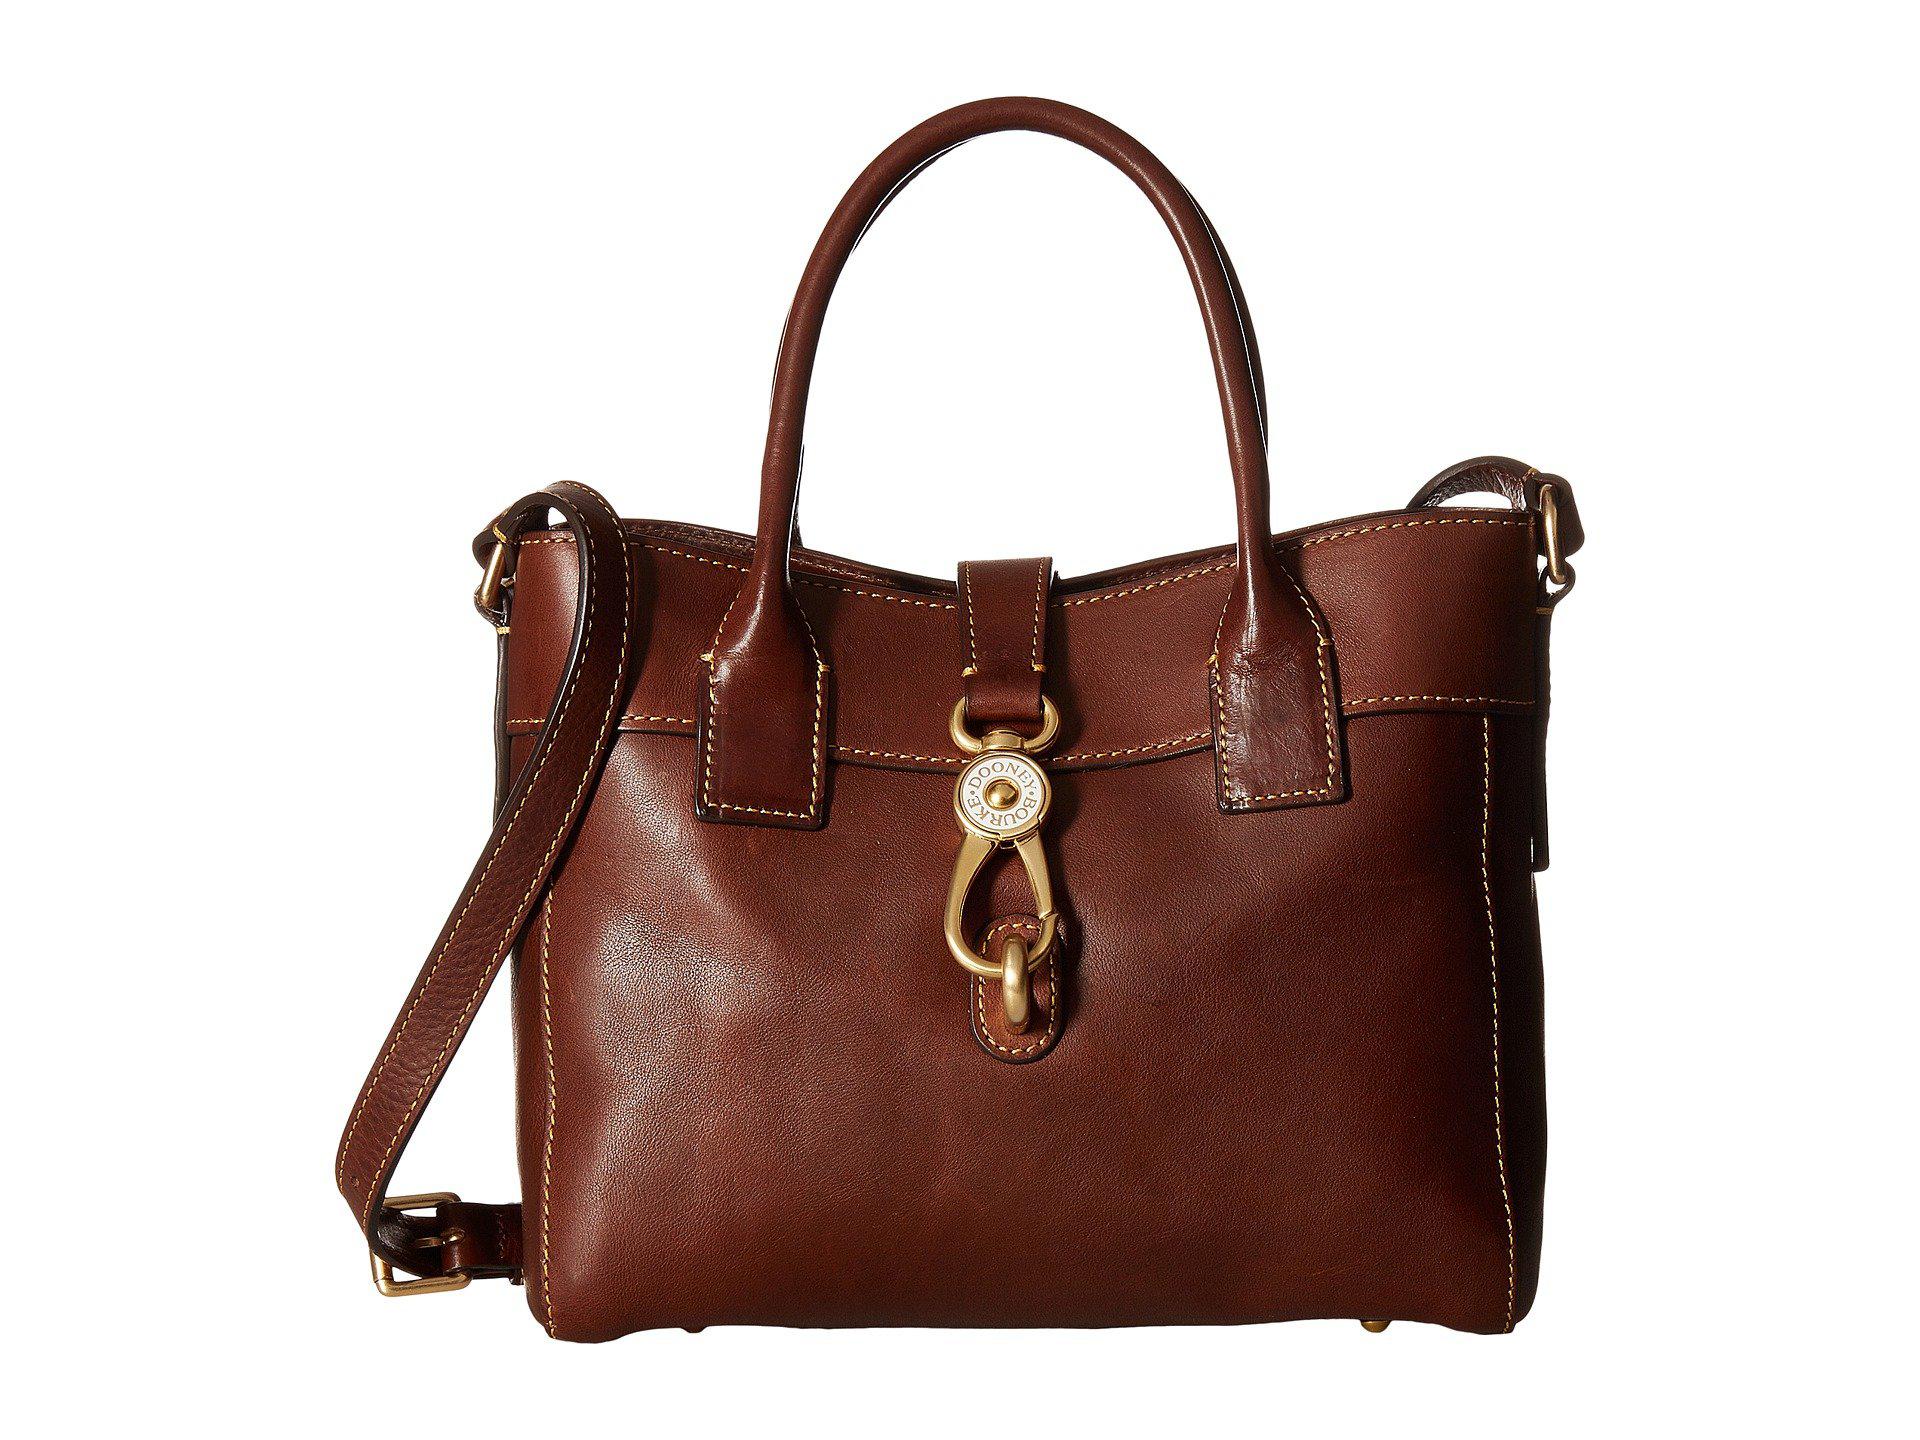 Lyst - Dooney & Bourke Florentine Classic Amelie Tote (natural/self Trim) Tote Handbags in Brown